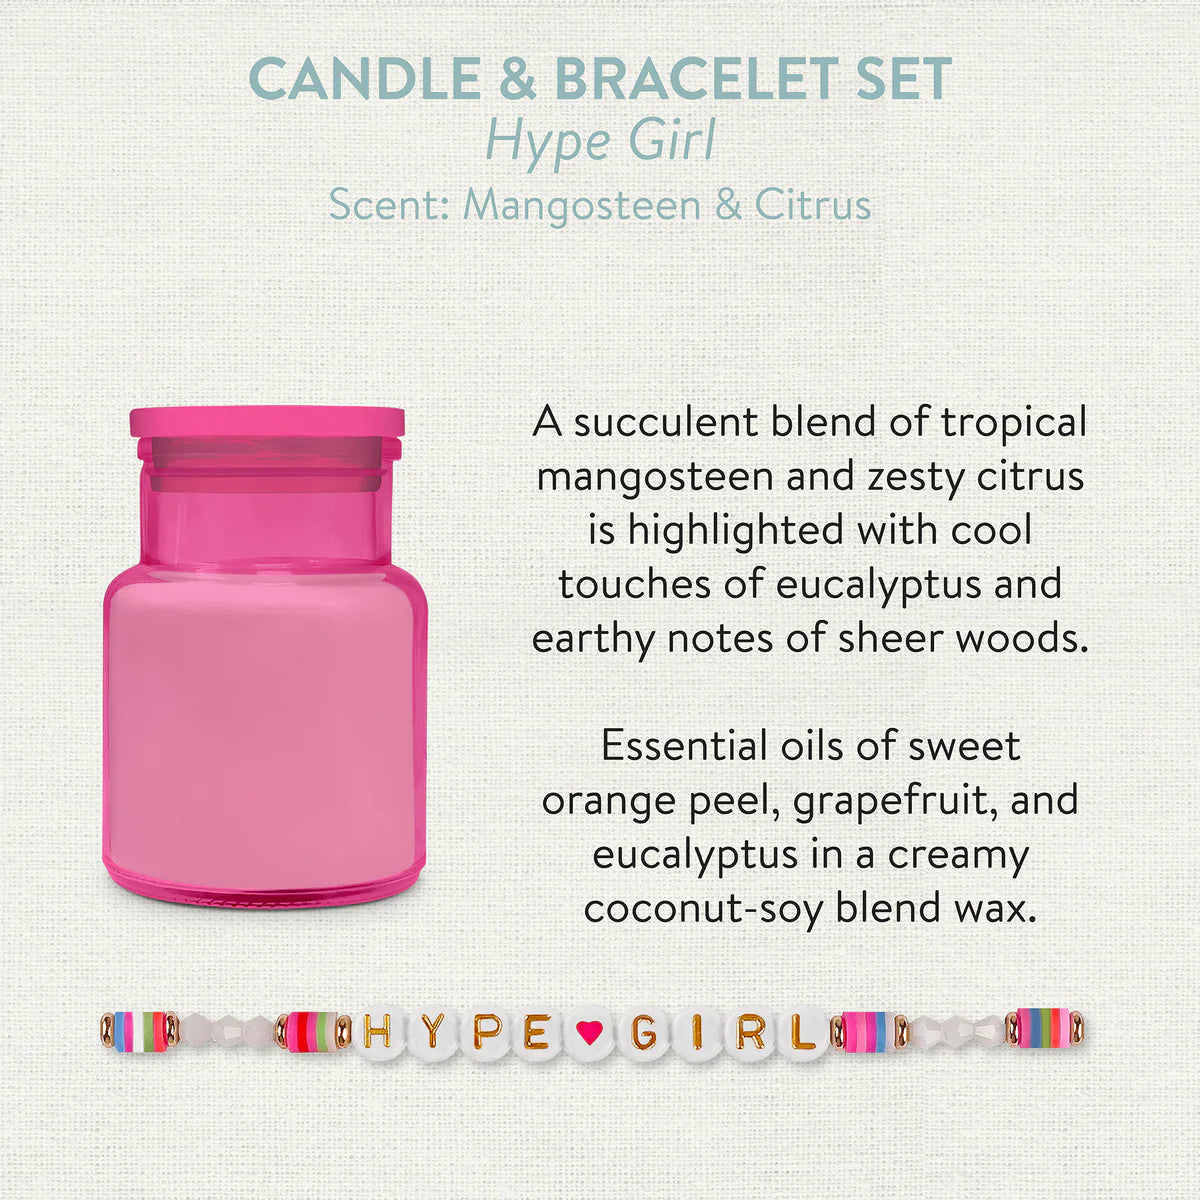 Golden Hype Girl Candle & Bracelet Set